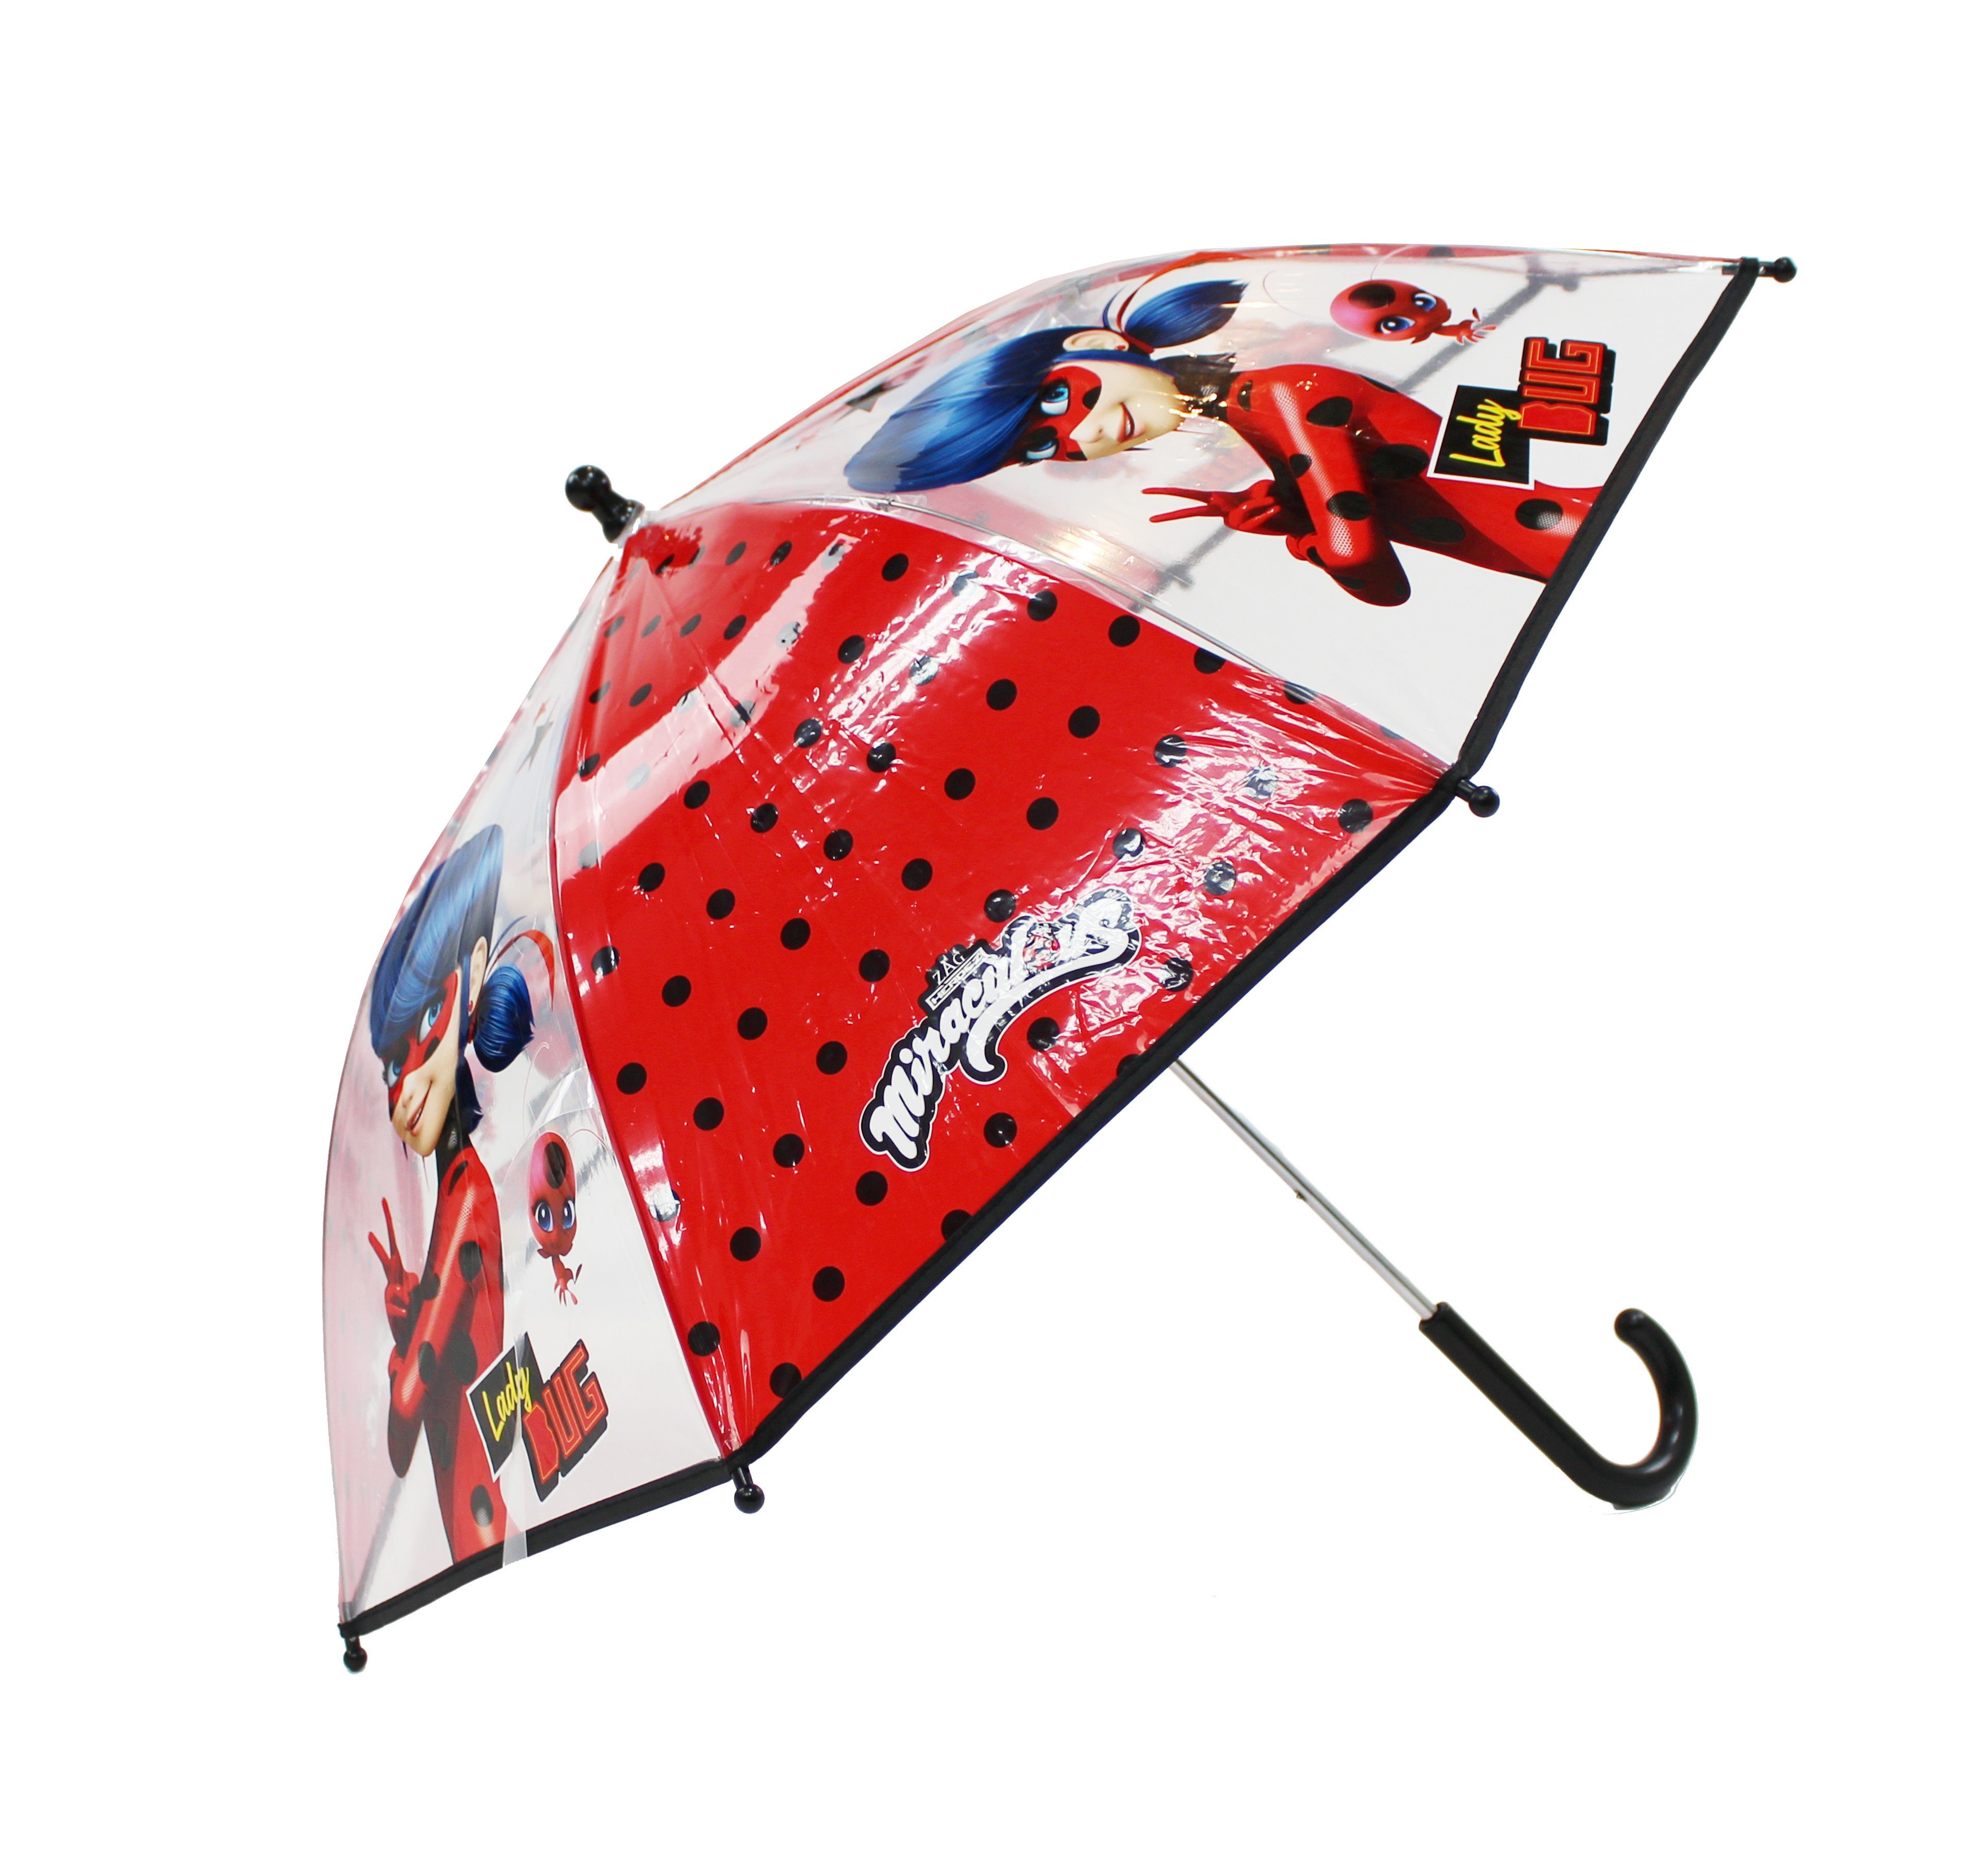 Vadobag Stockregenschirm Kinderschirm Regenschirm Miraculous Rainy Days, Kindermotiv